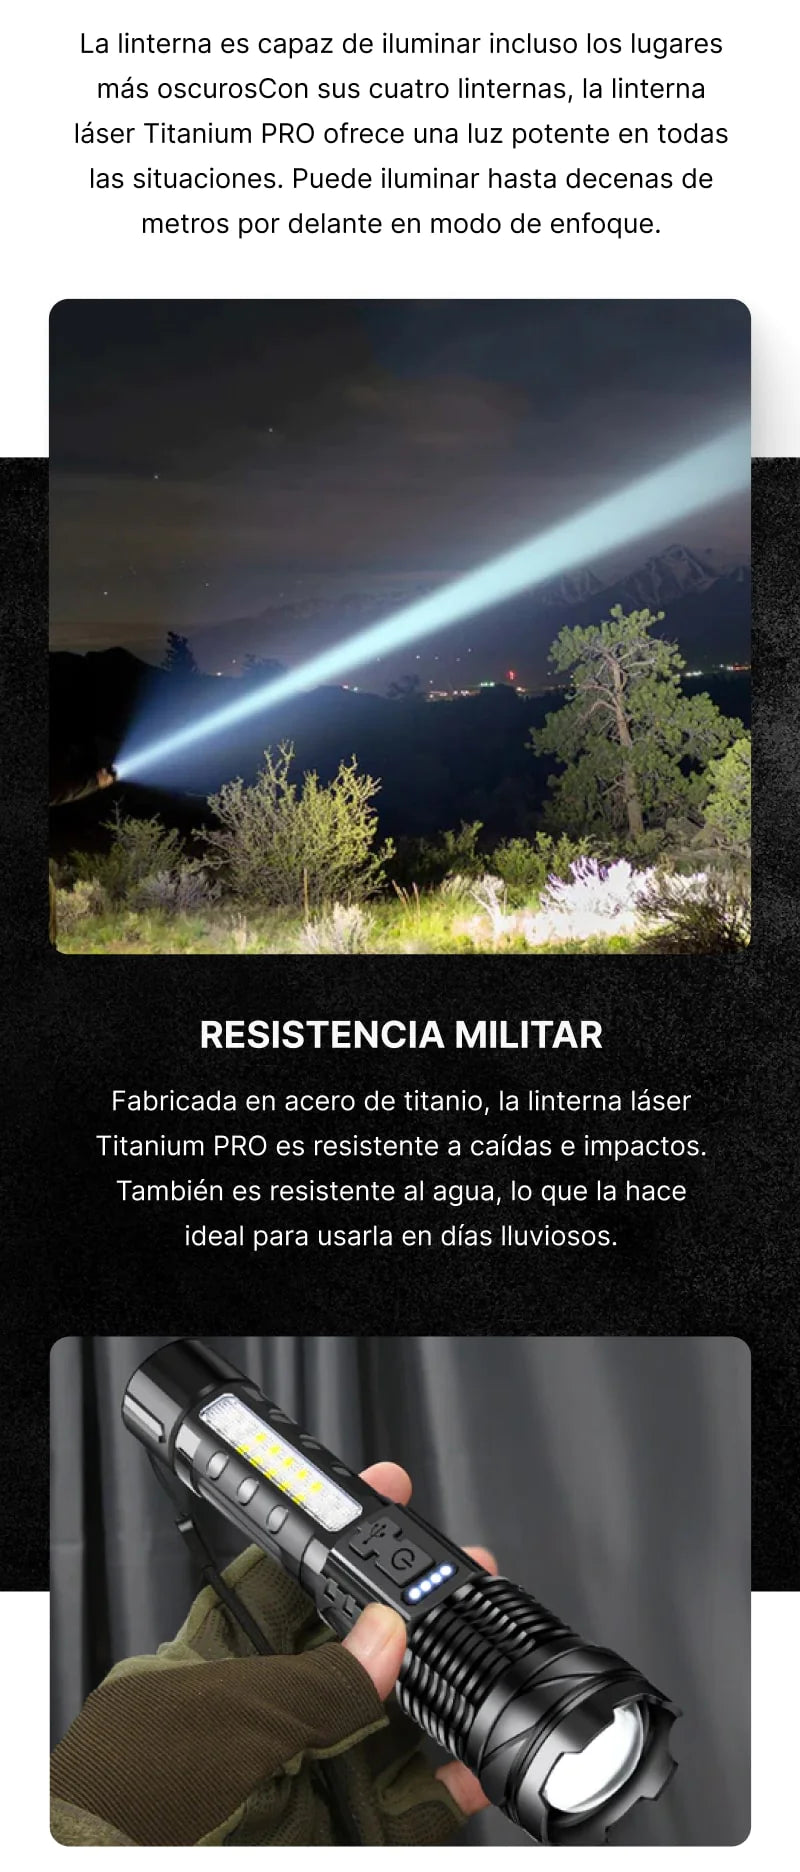 Linterna MILITAR Laser Pro Titanium® resistente al agua: la más potent